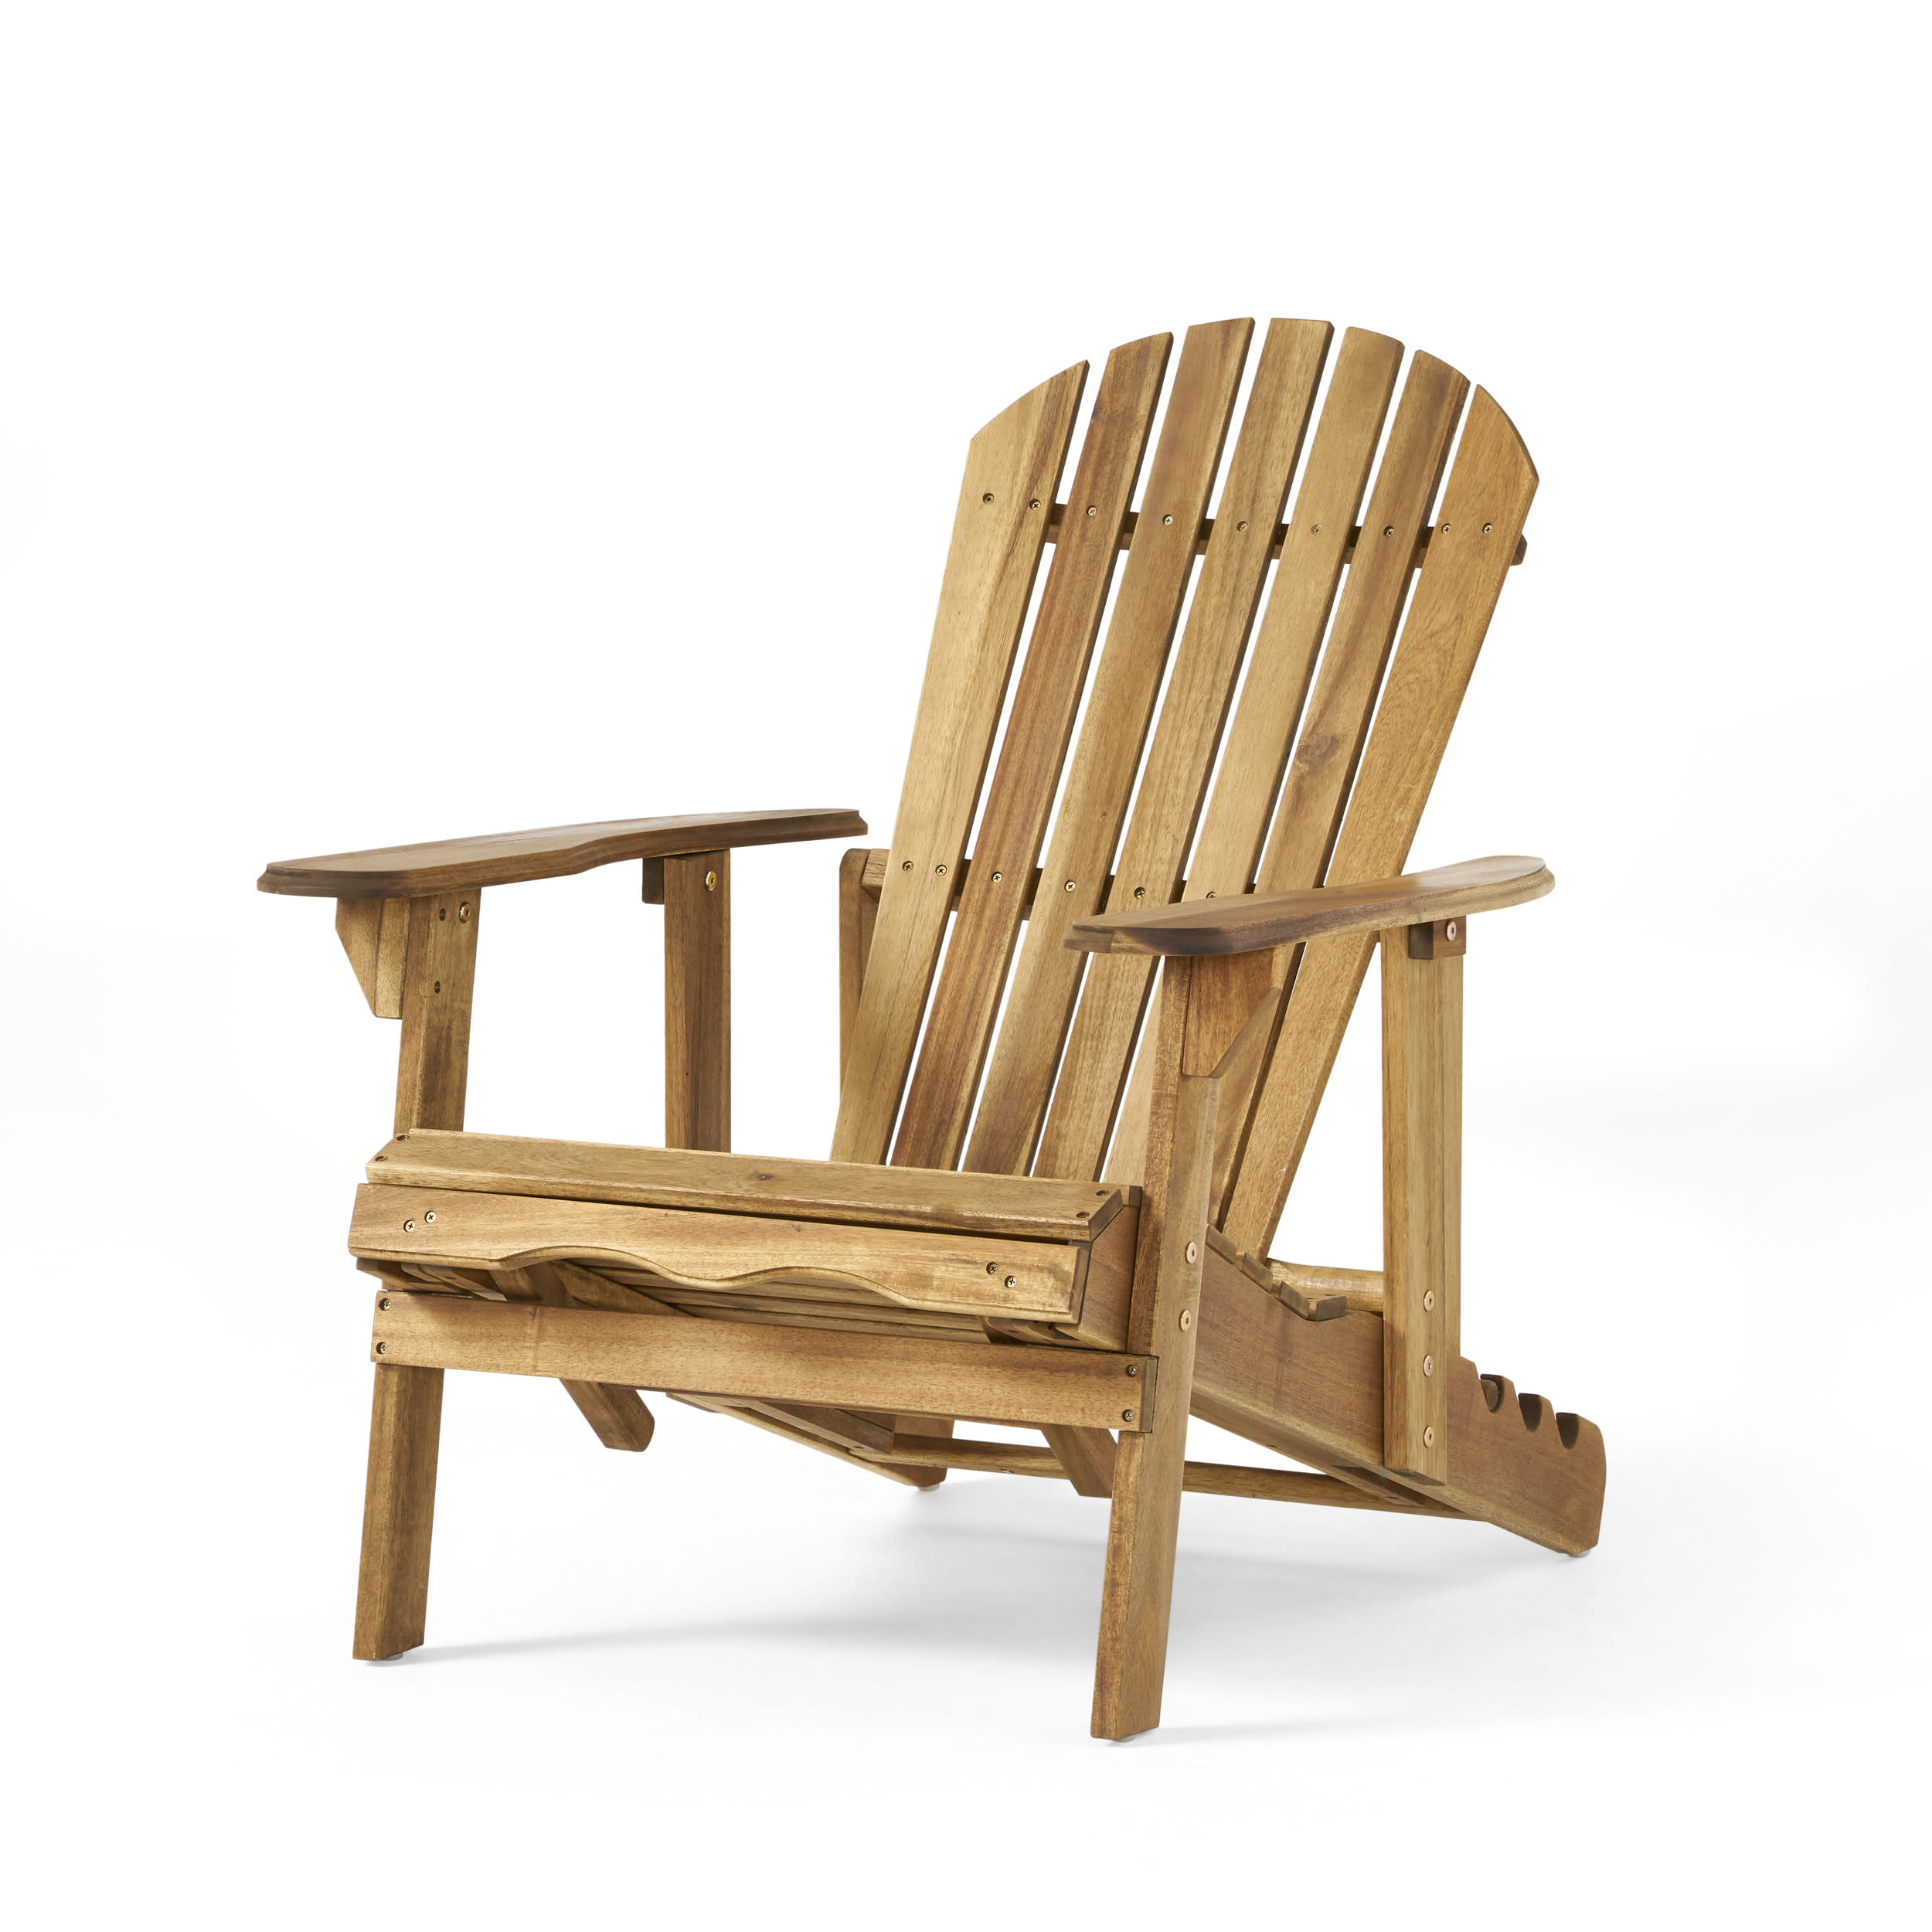 GDF Studio Kono Outdoor Acacia Wood Reclining Adirondack Chair with Footrest, Natural - image 1 of 8